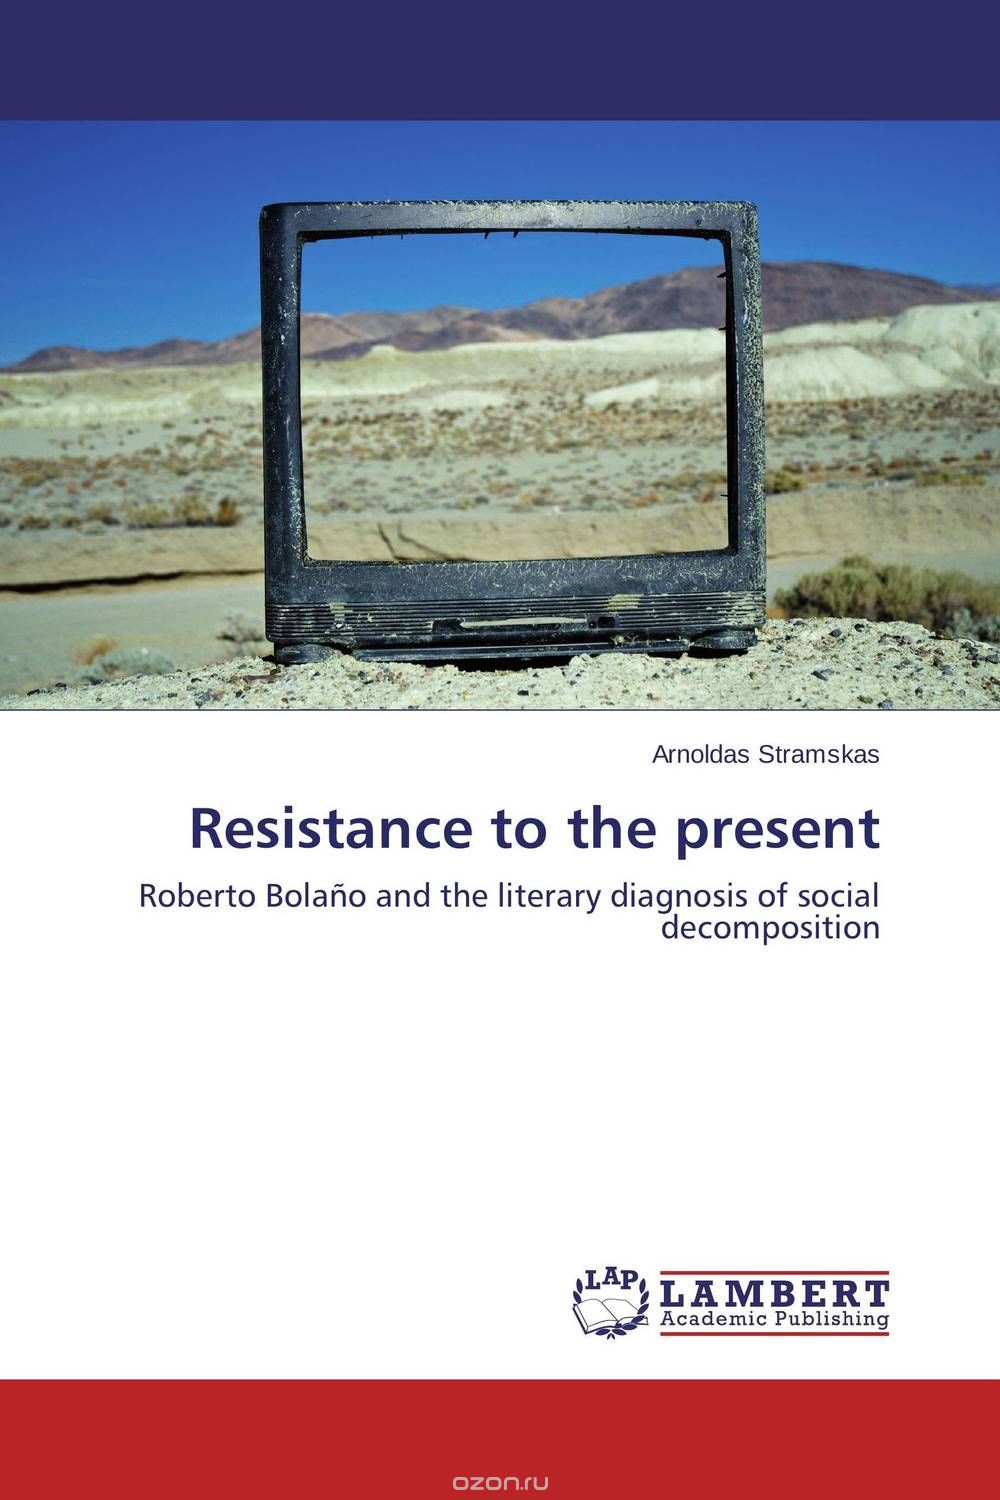 Скачать книгу "Resistance to the present"